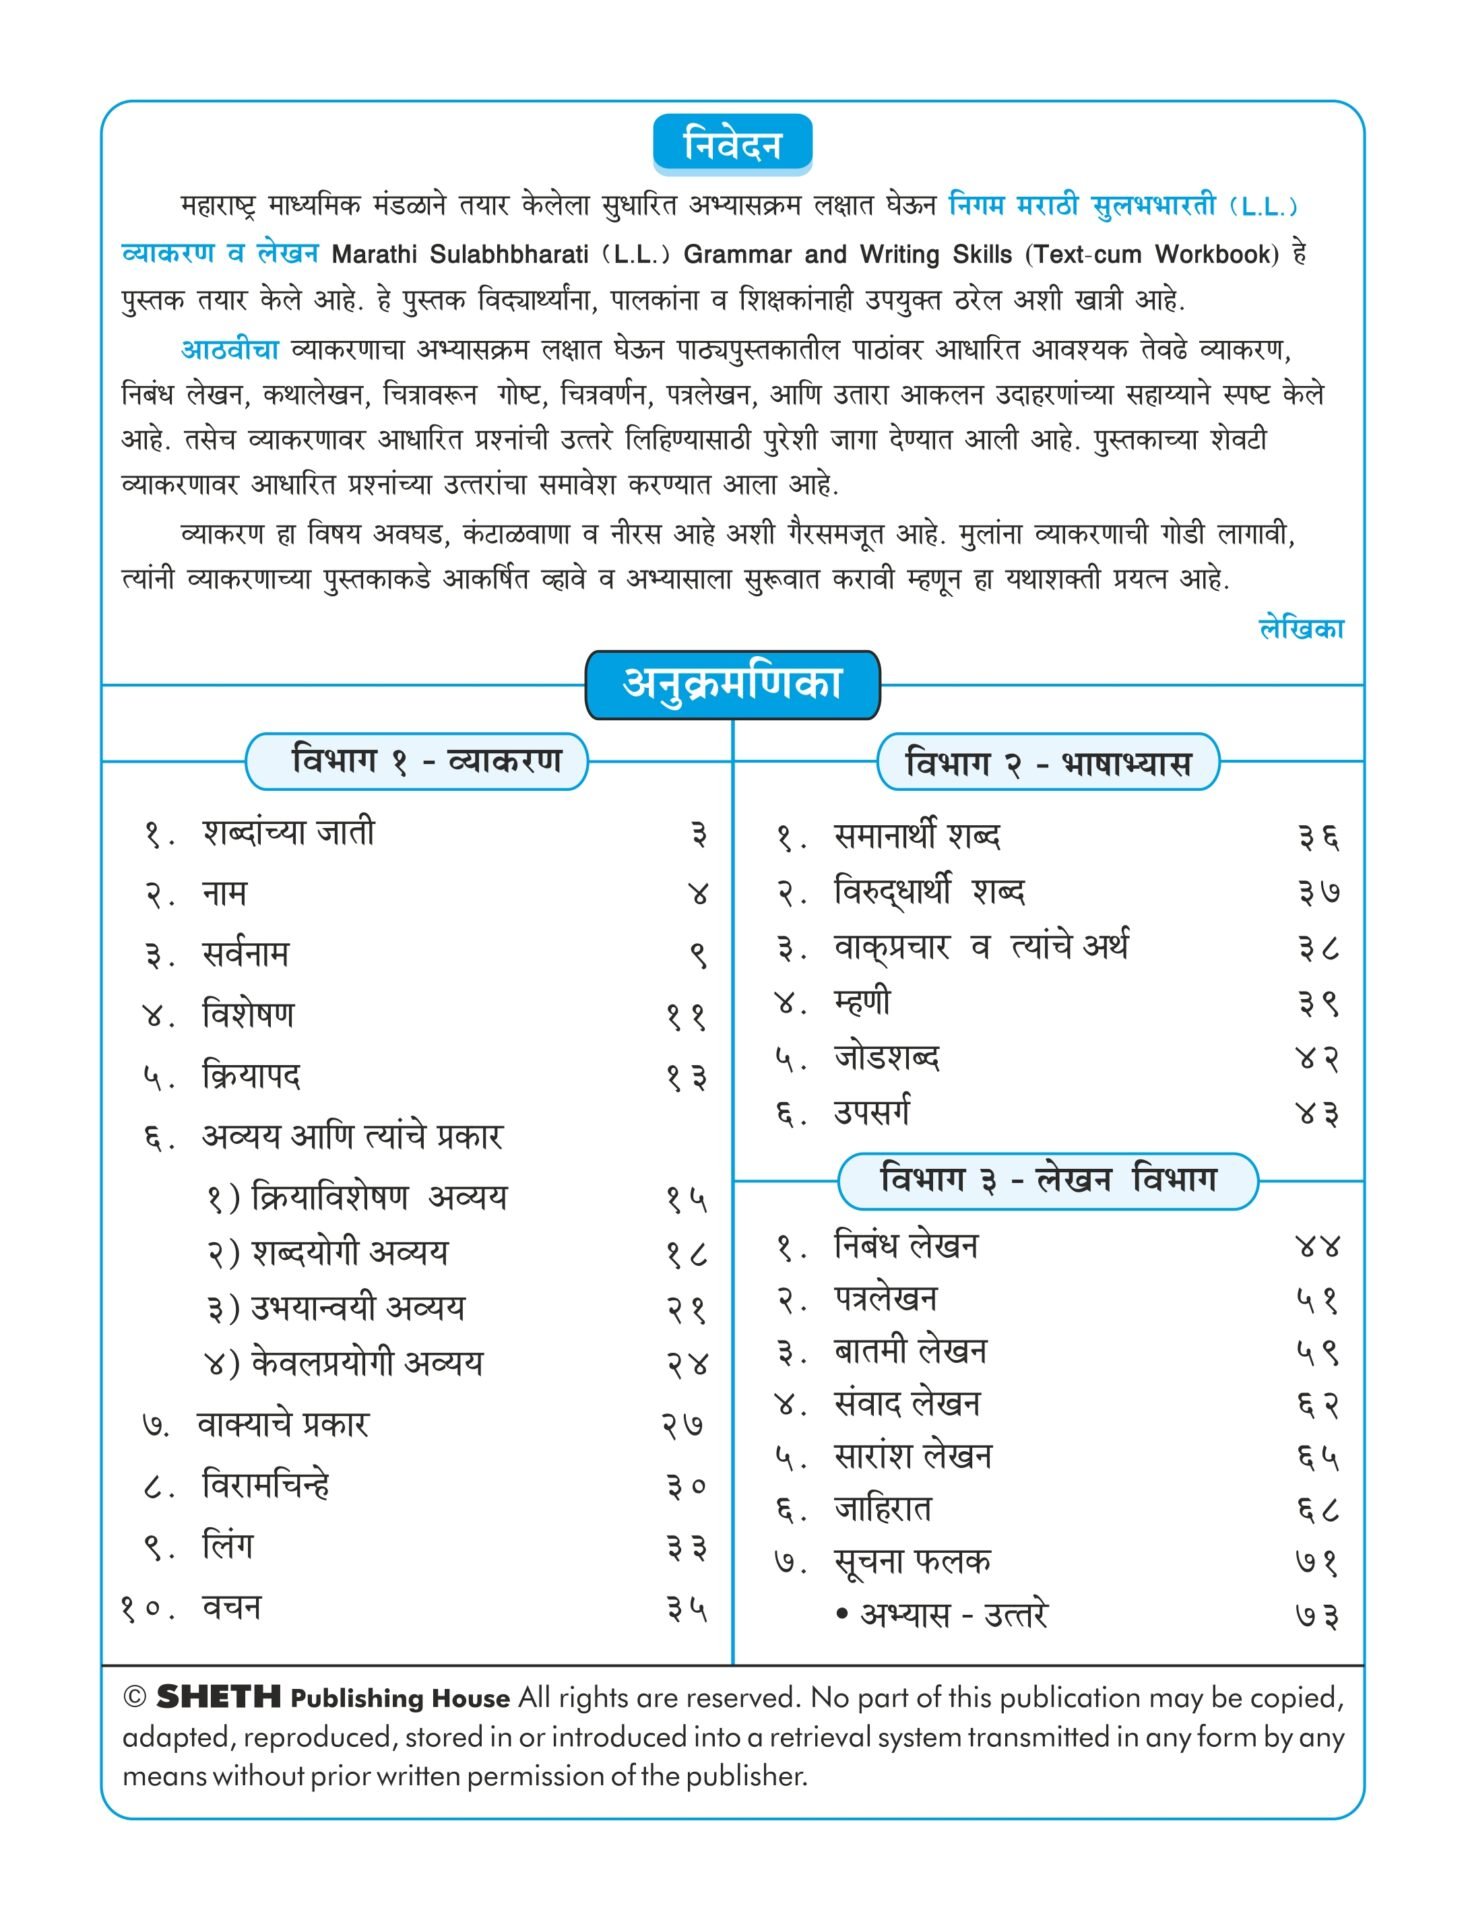 Nigam Marathi Sulabhbharati Grammar And Writing Skills Standard 8 2